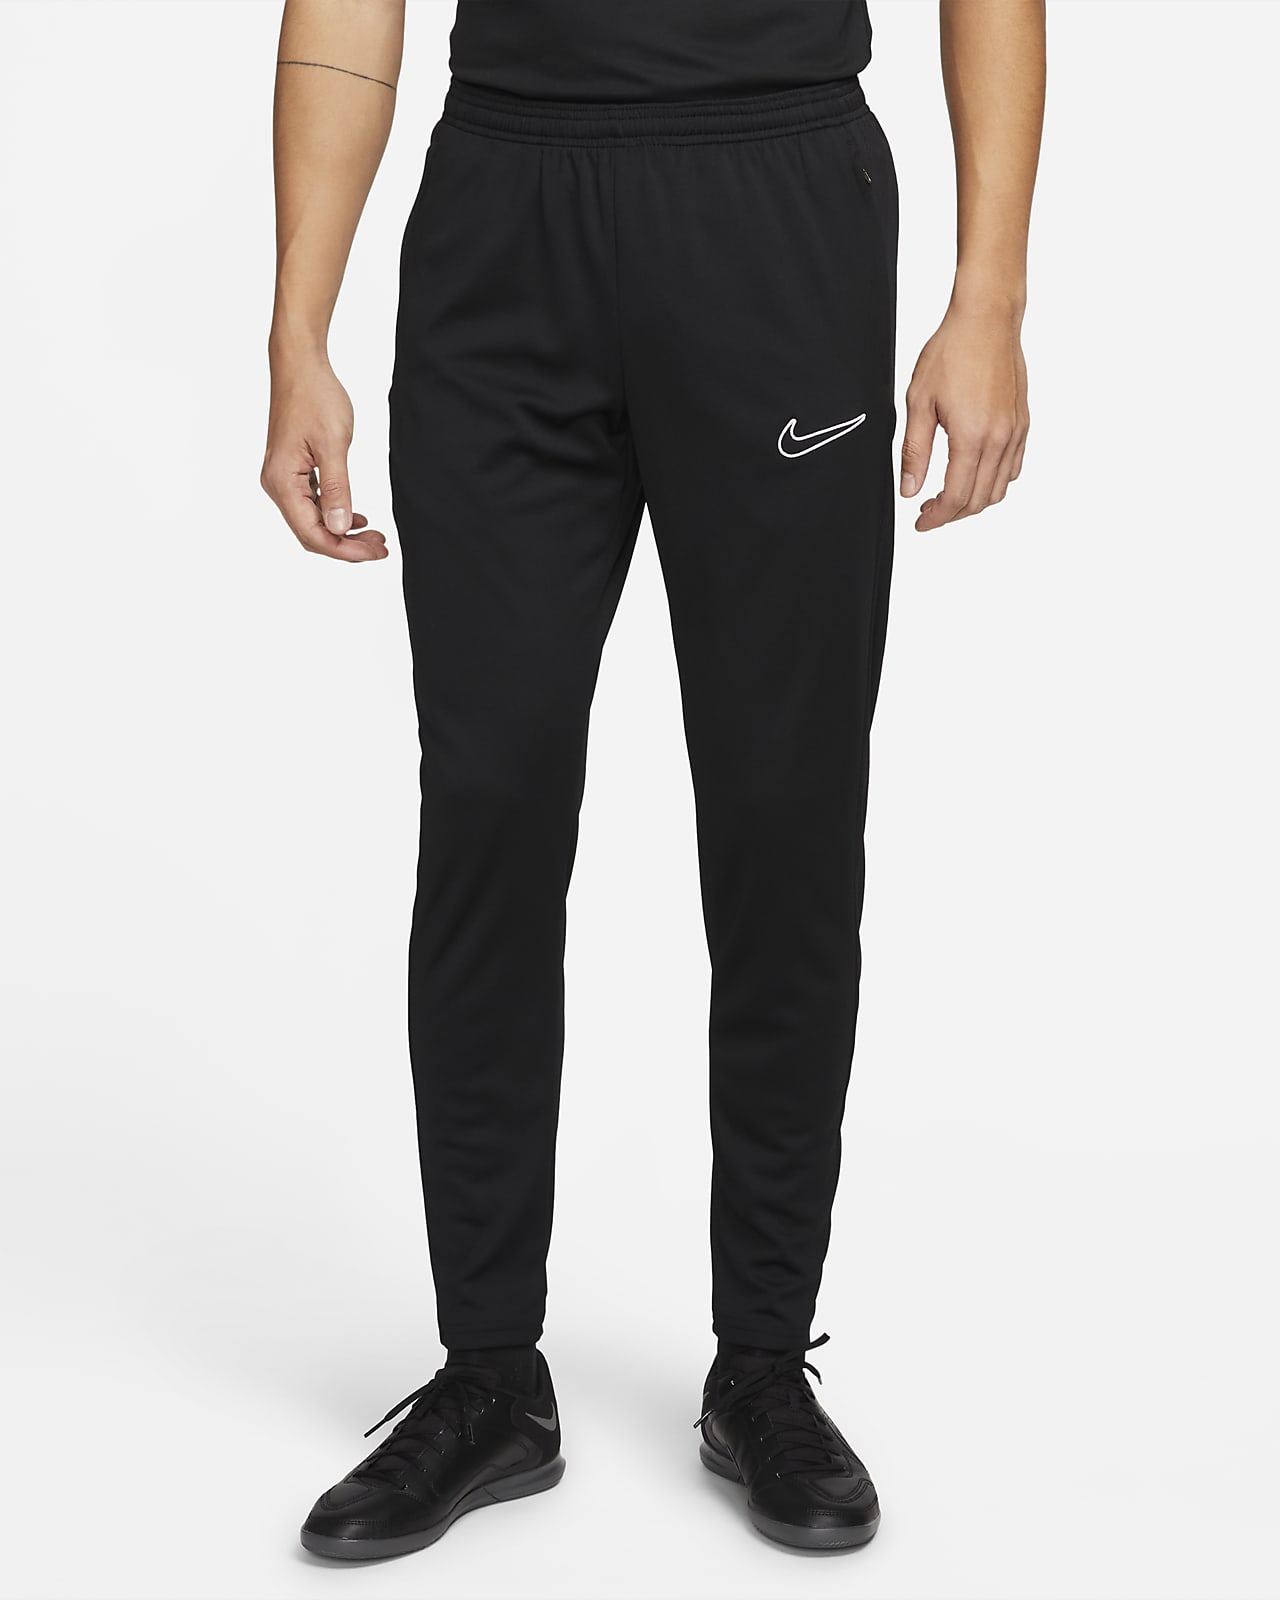 Pants de fútbol de tejido Knit para hombre (Stock) Nike Dri-FIT Academy.  Nike MX